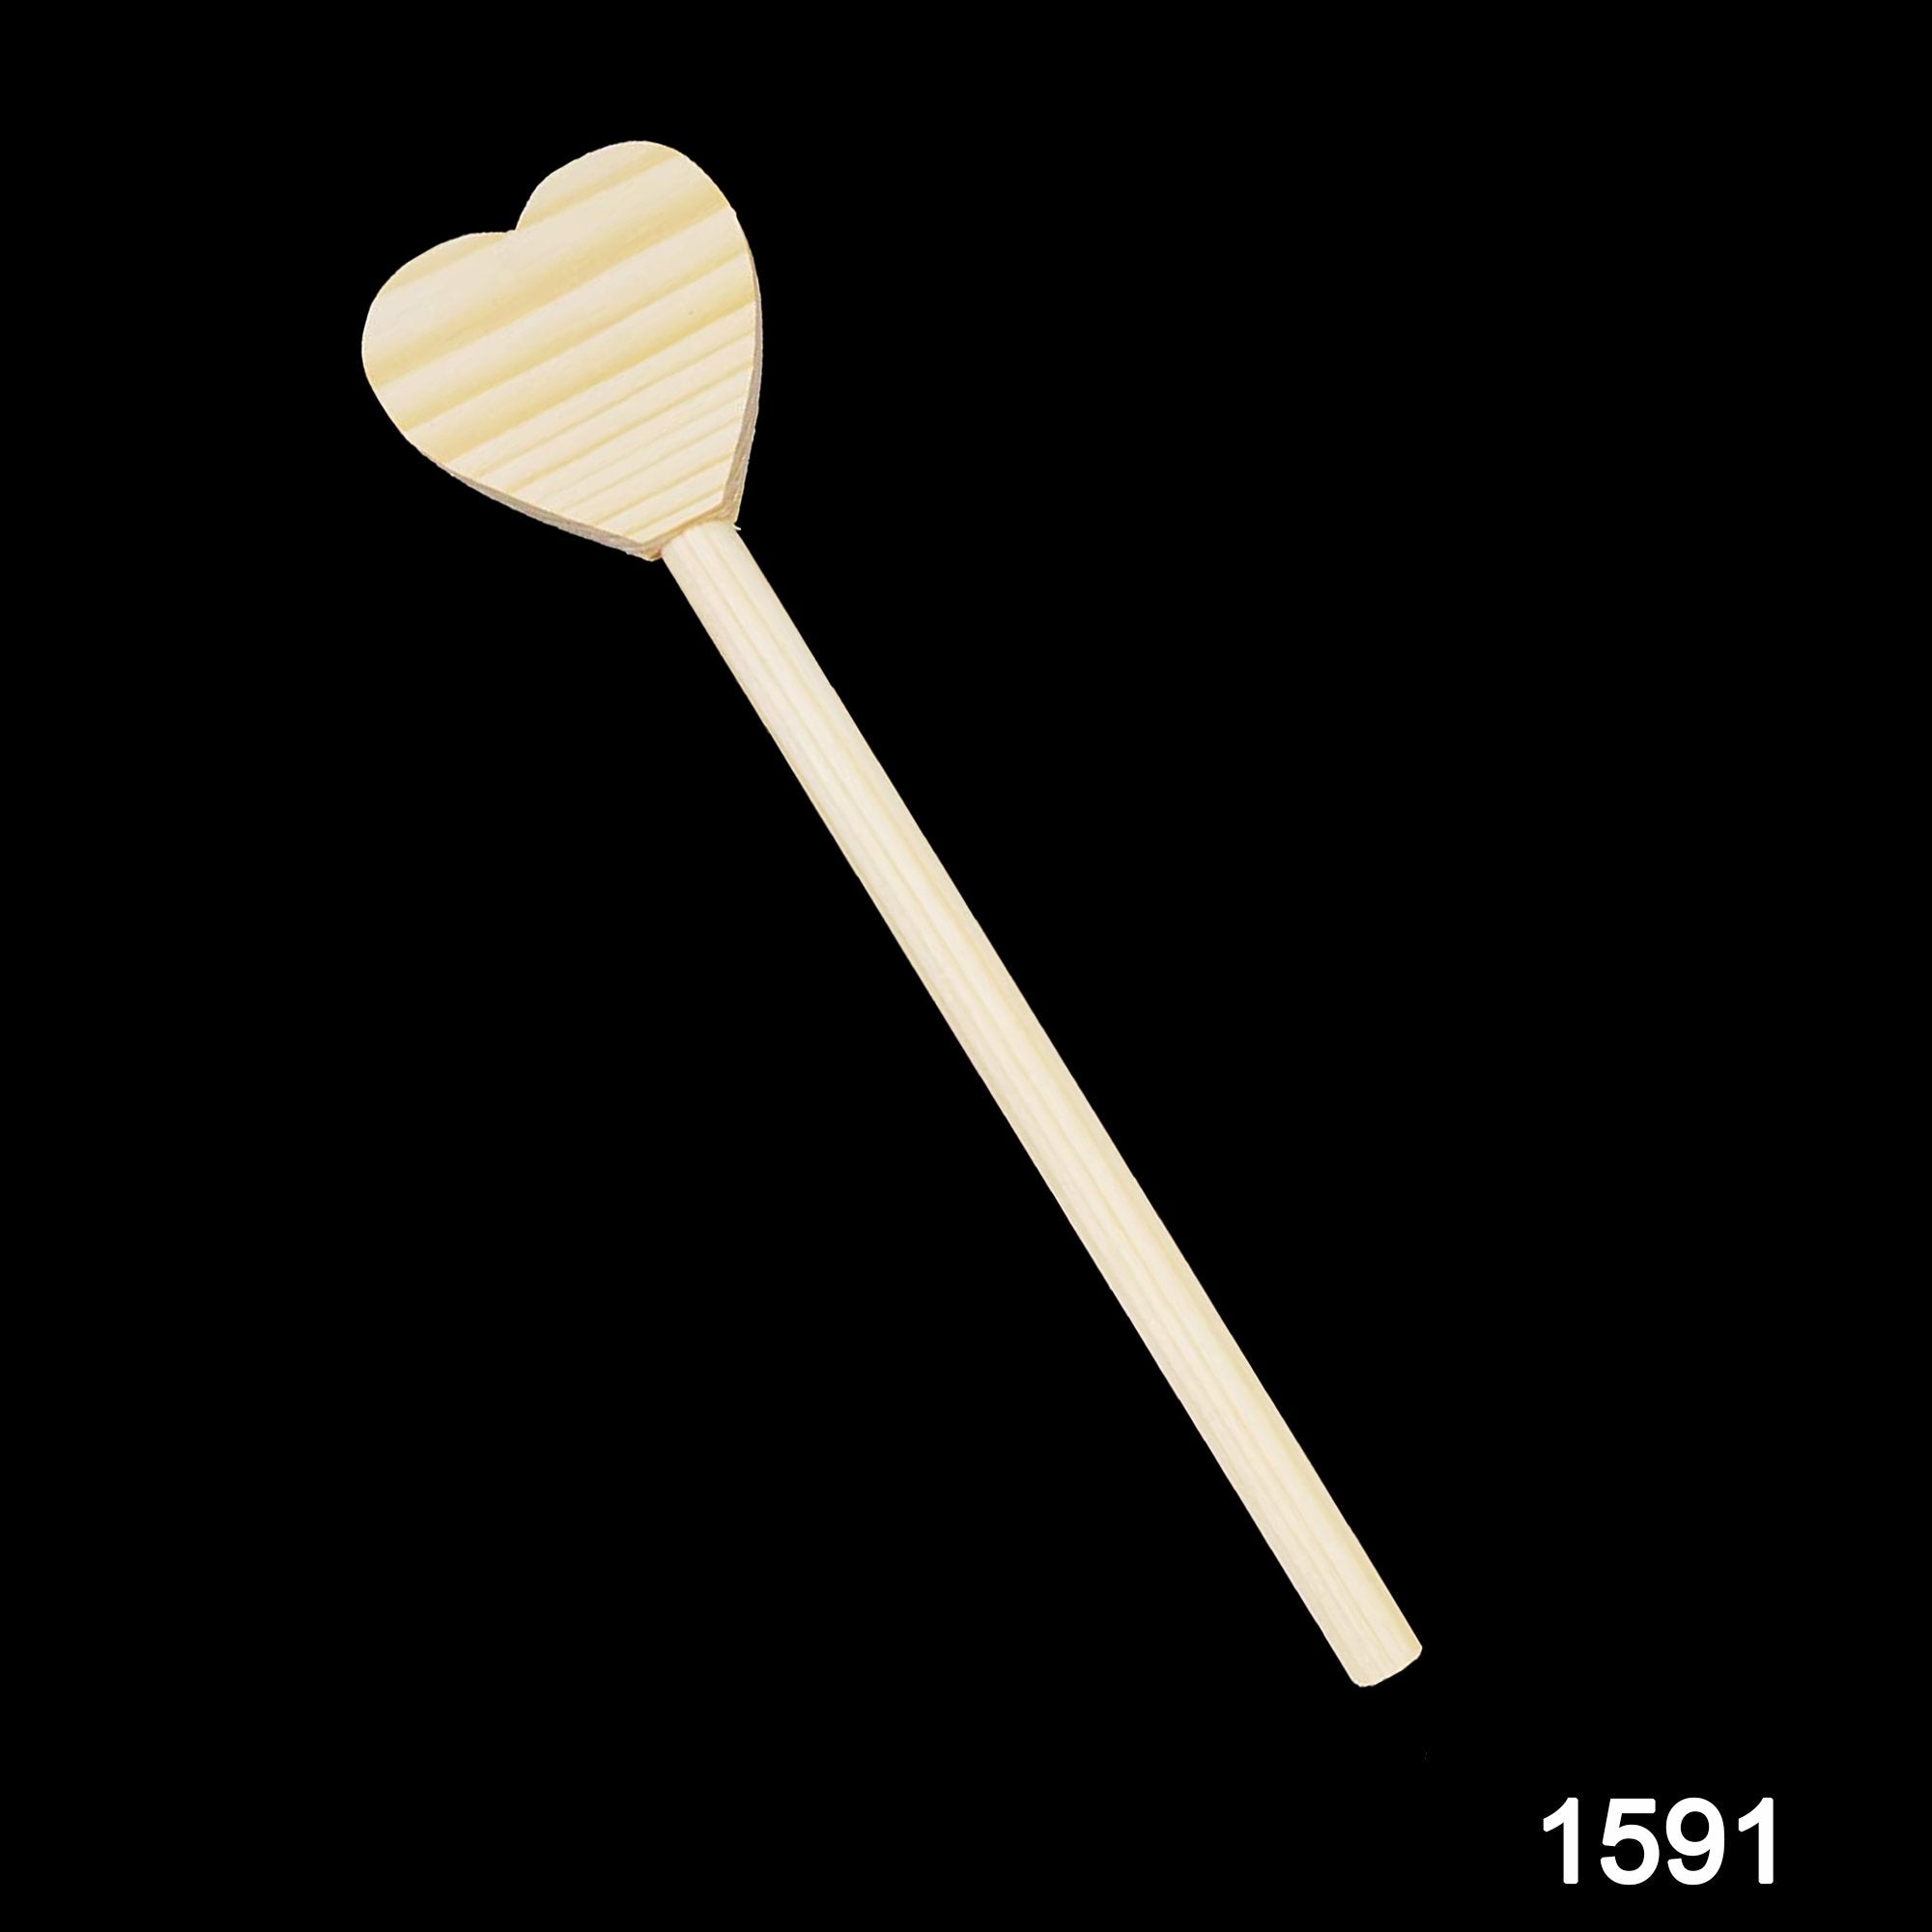 1591 heart shape hammer for pinata cake